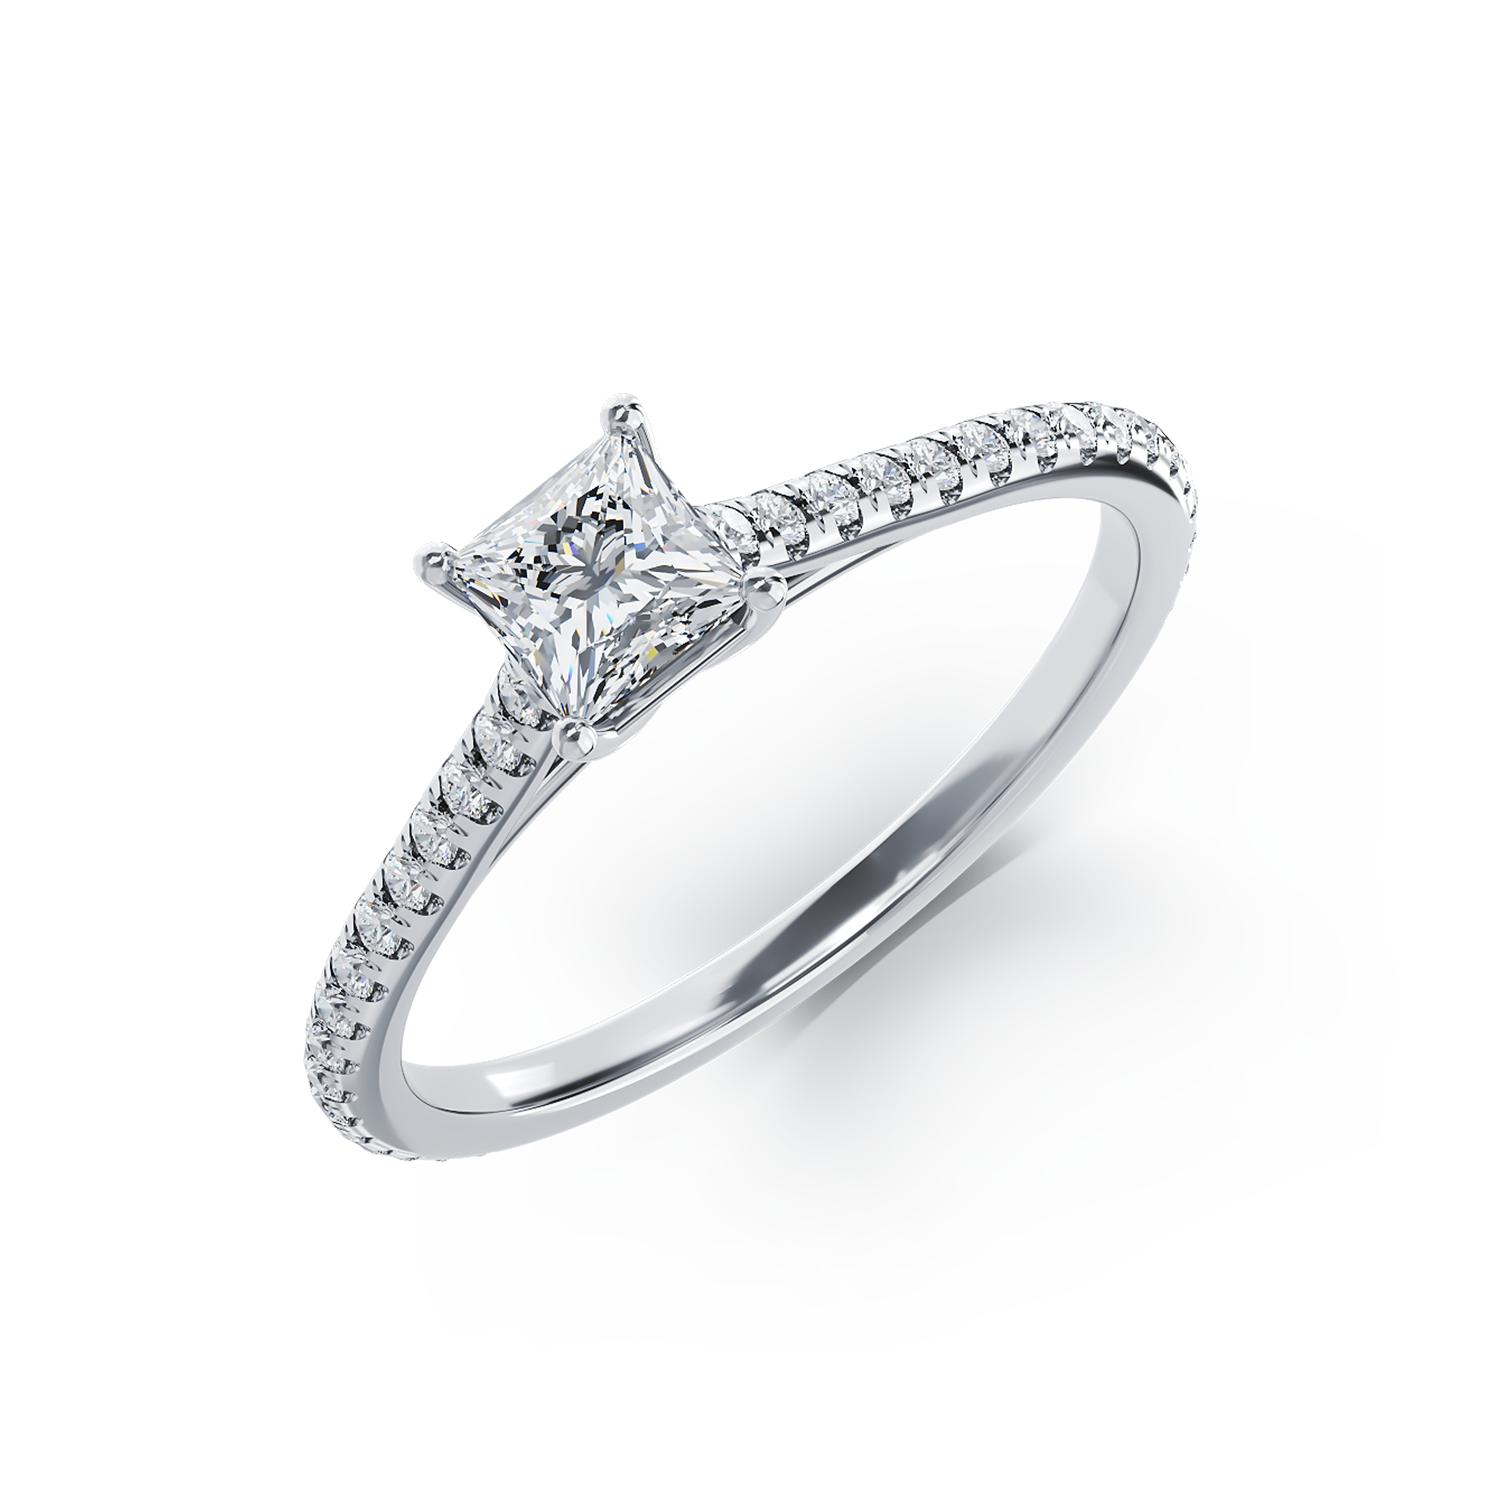 Platinum engagement ring with 0.4ct diamond and 0.19ct diamonds